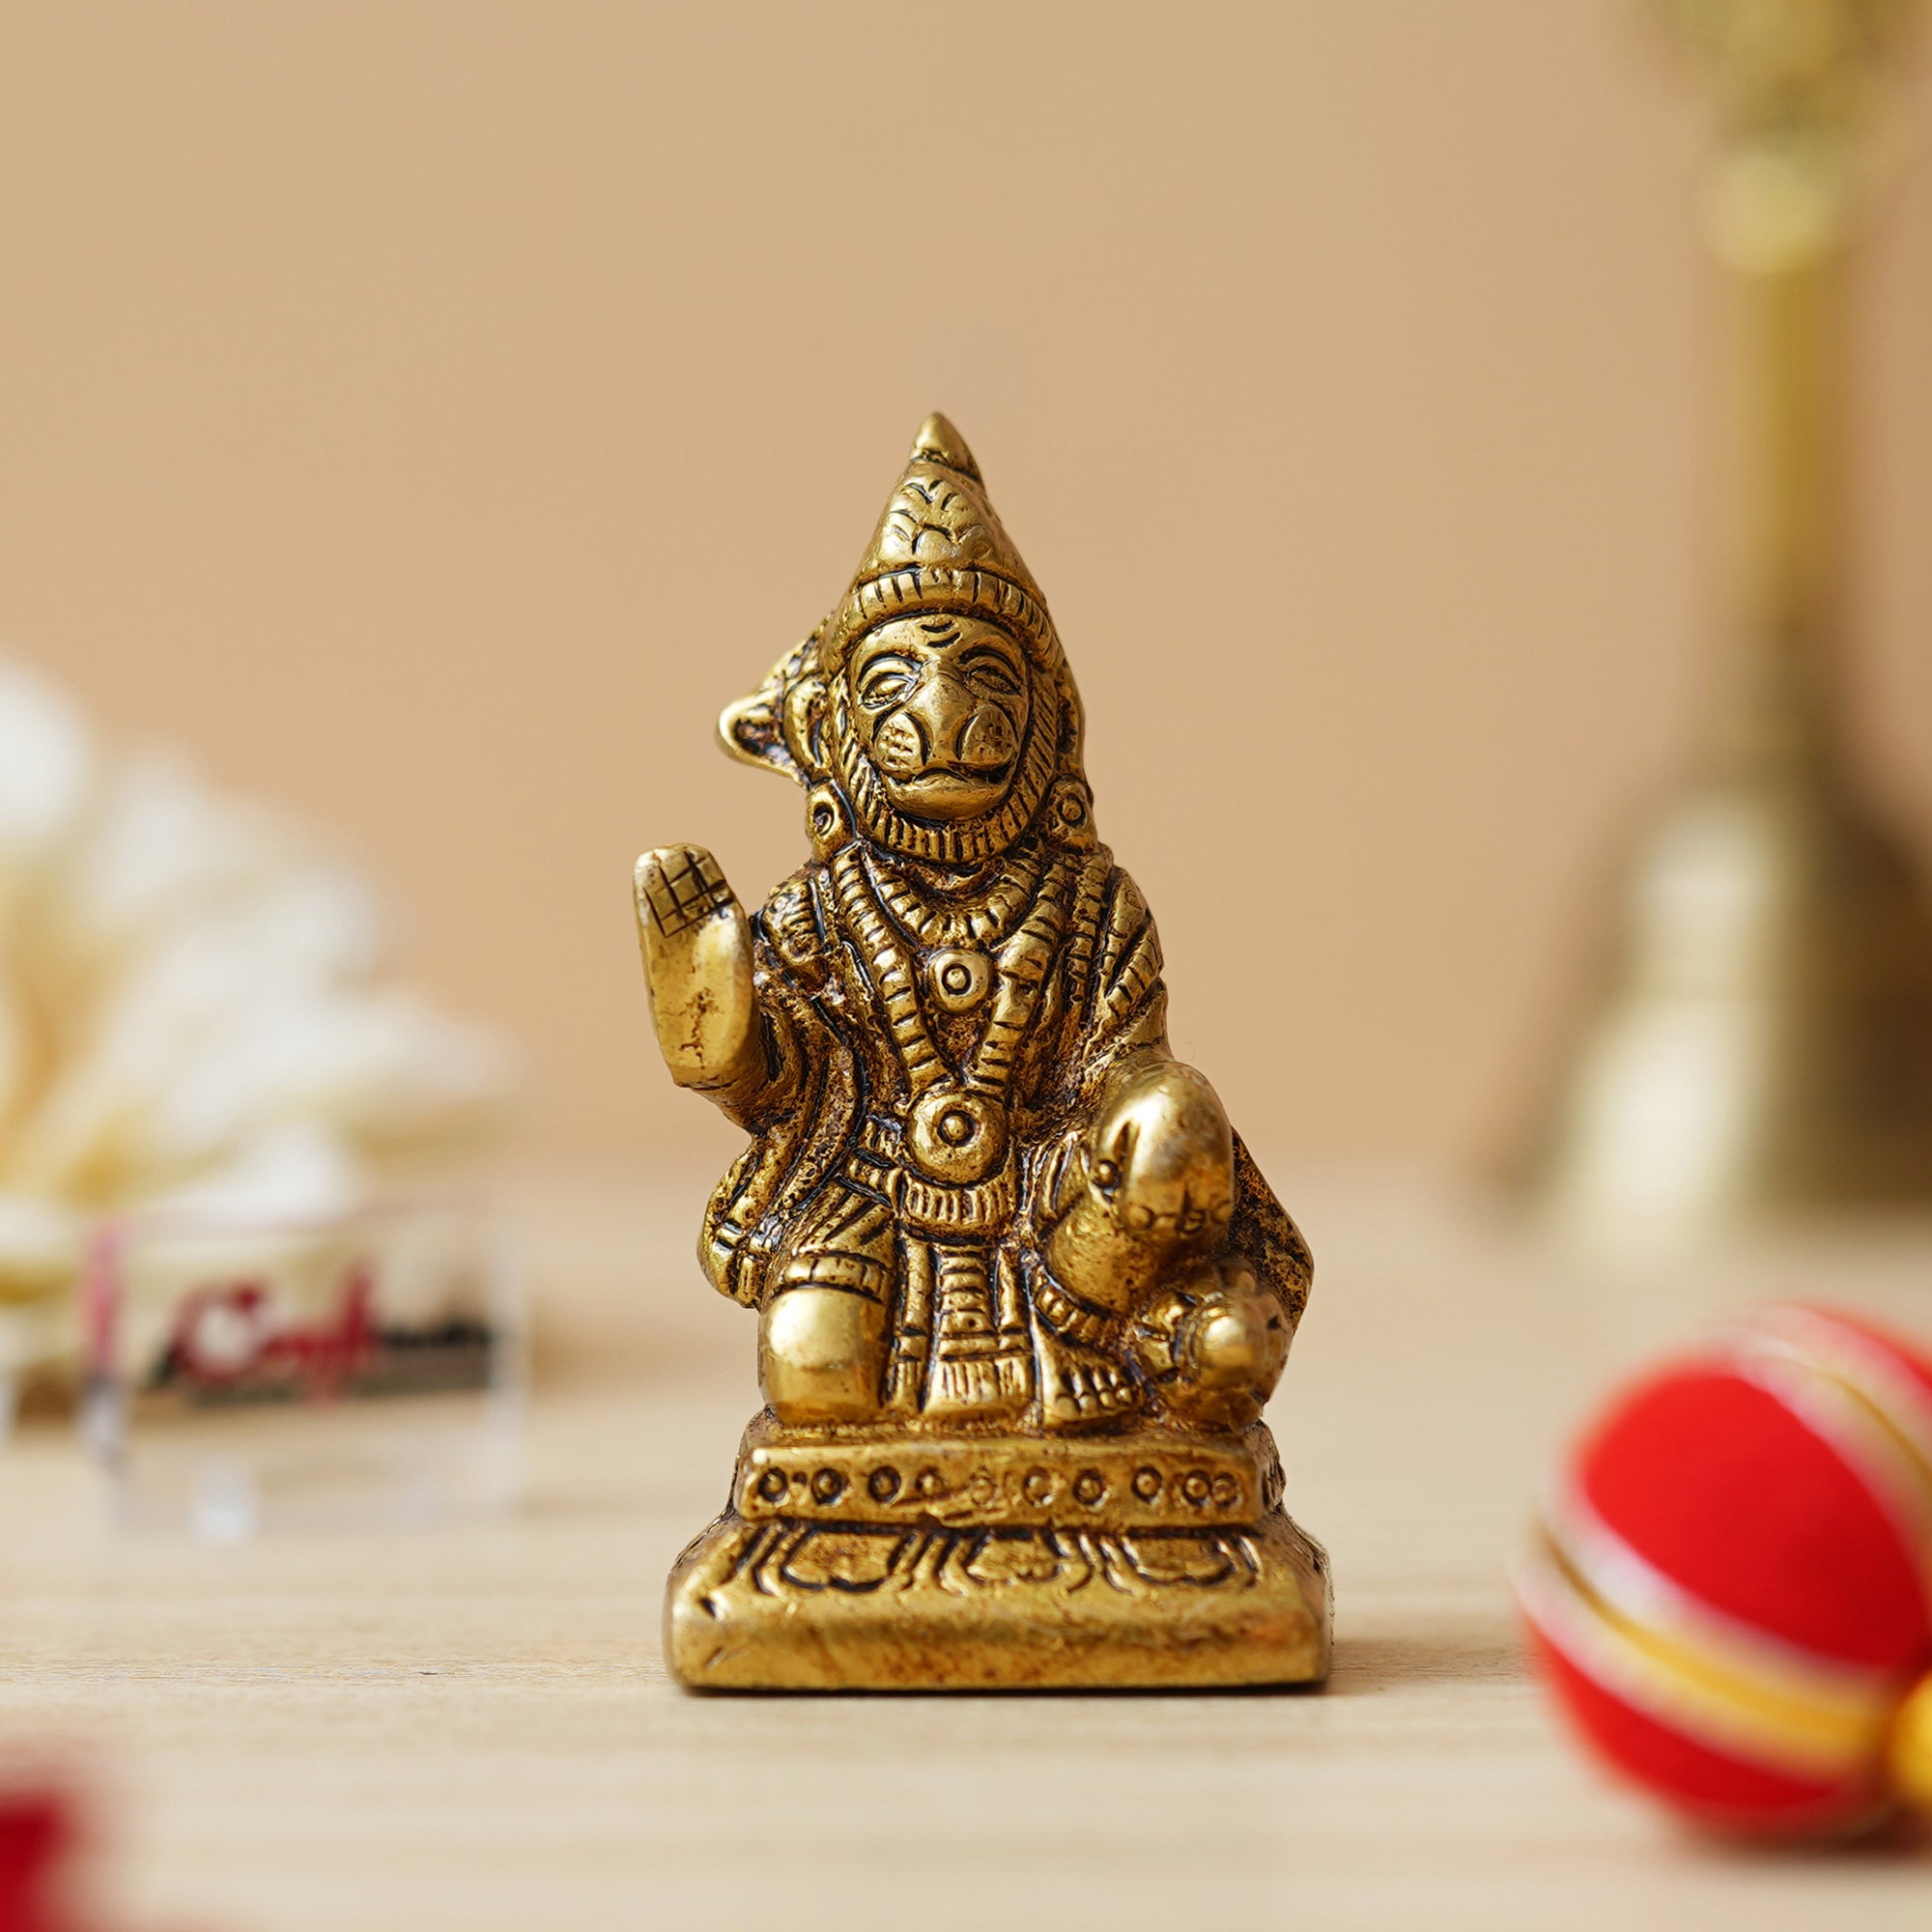 Golden Brass Blessing Lord Hanuman Statue Murti - Hindu God Idol for Home, Office, Temple Mandir - Hanuman Jayanti Gift 5